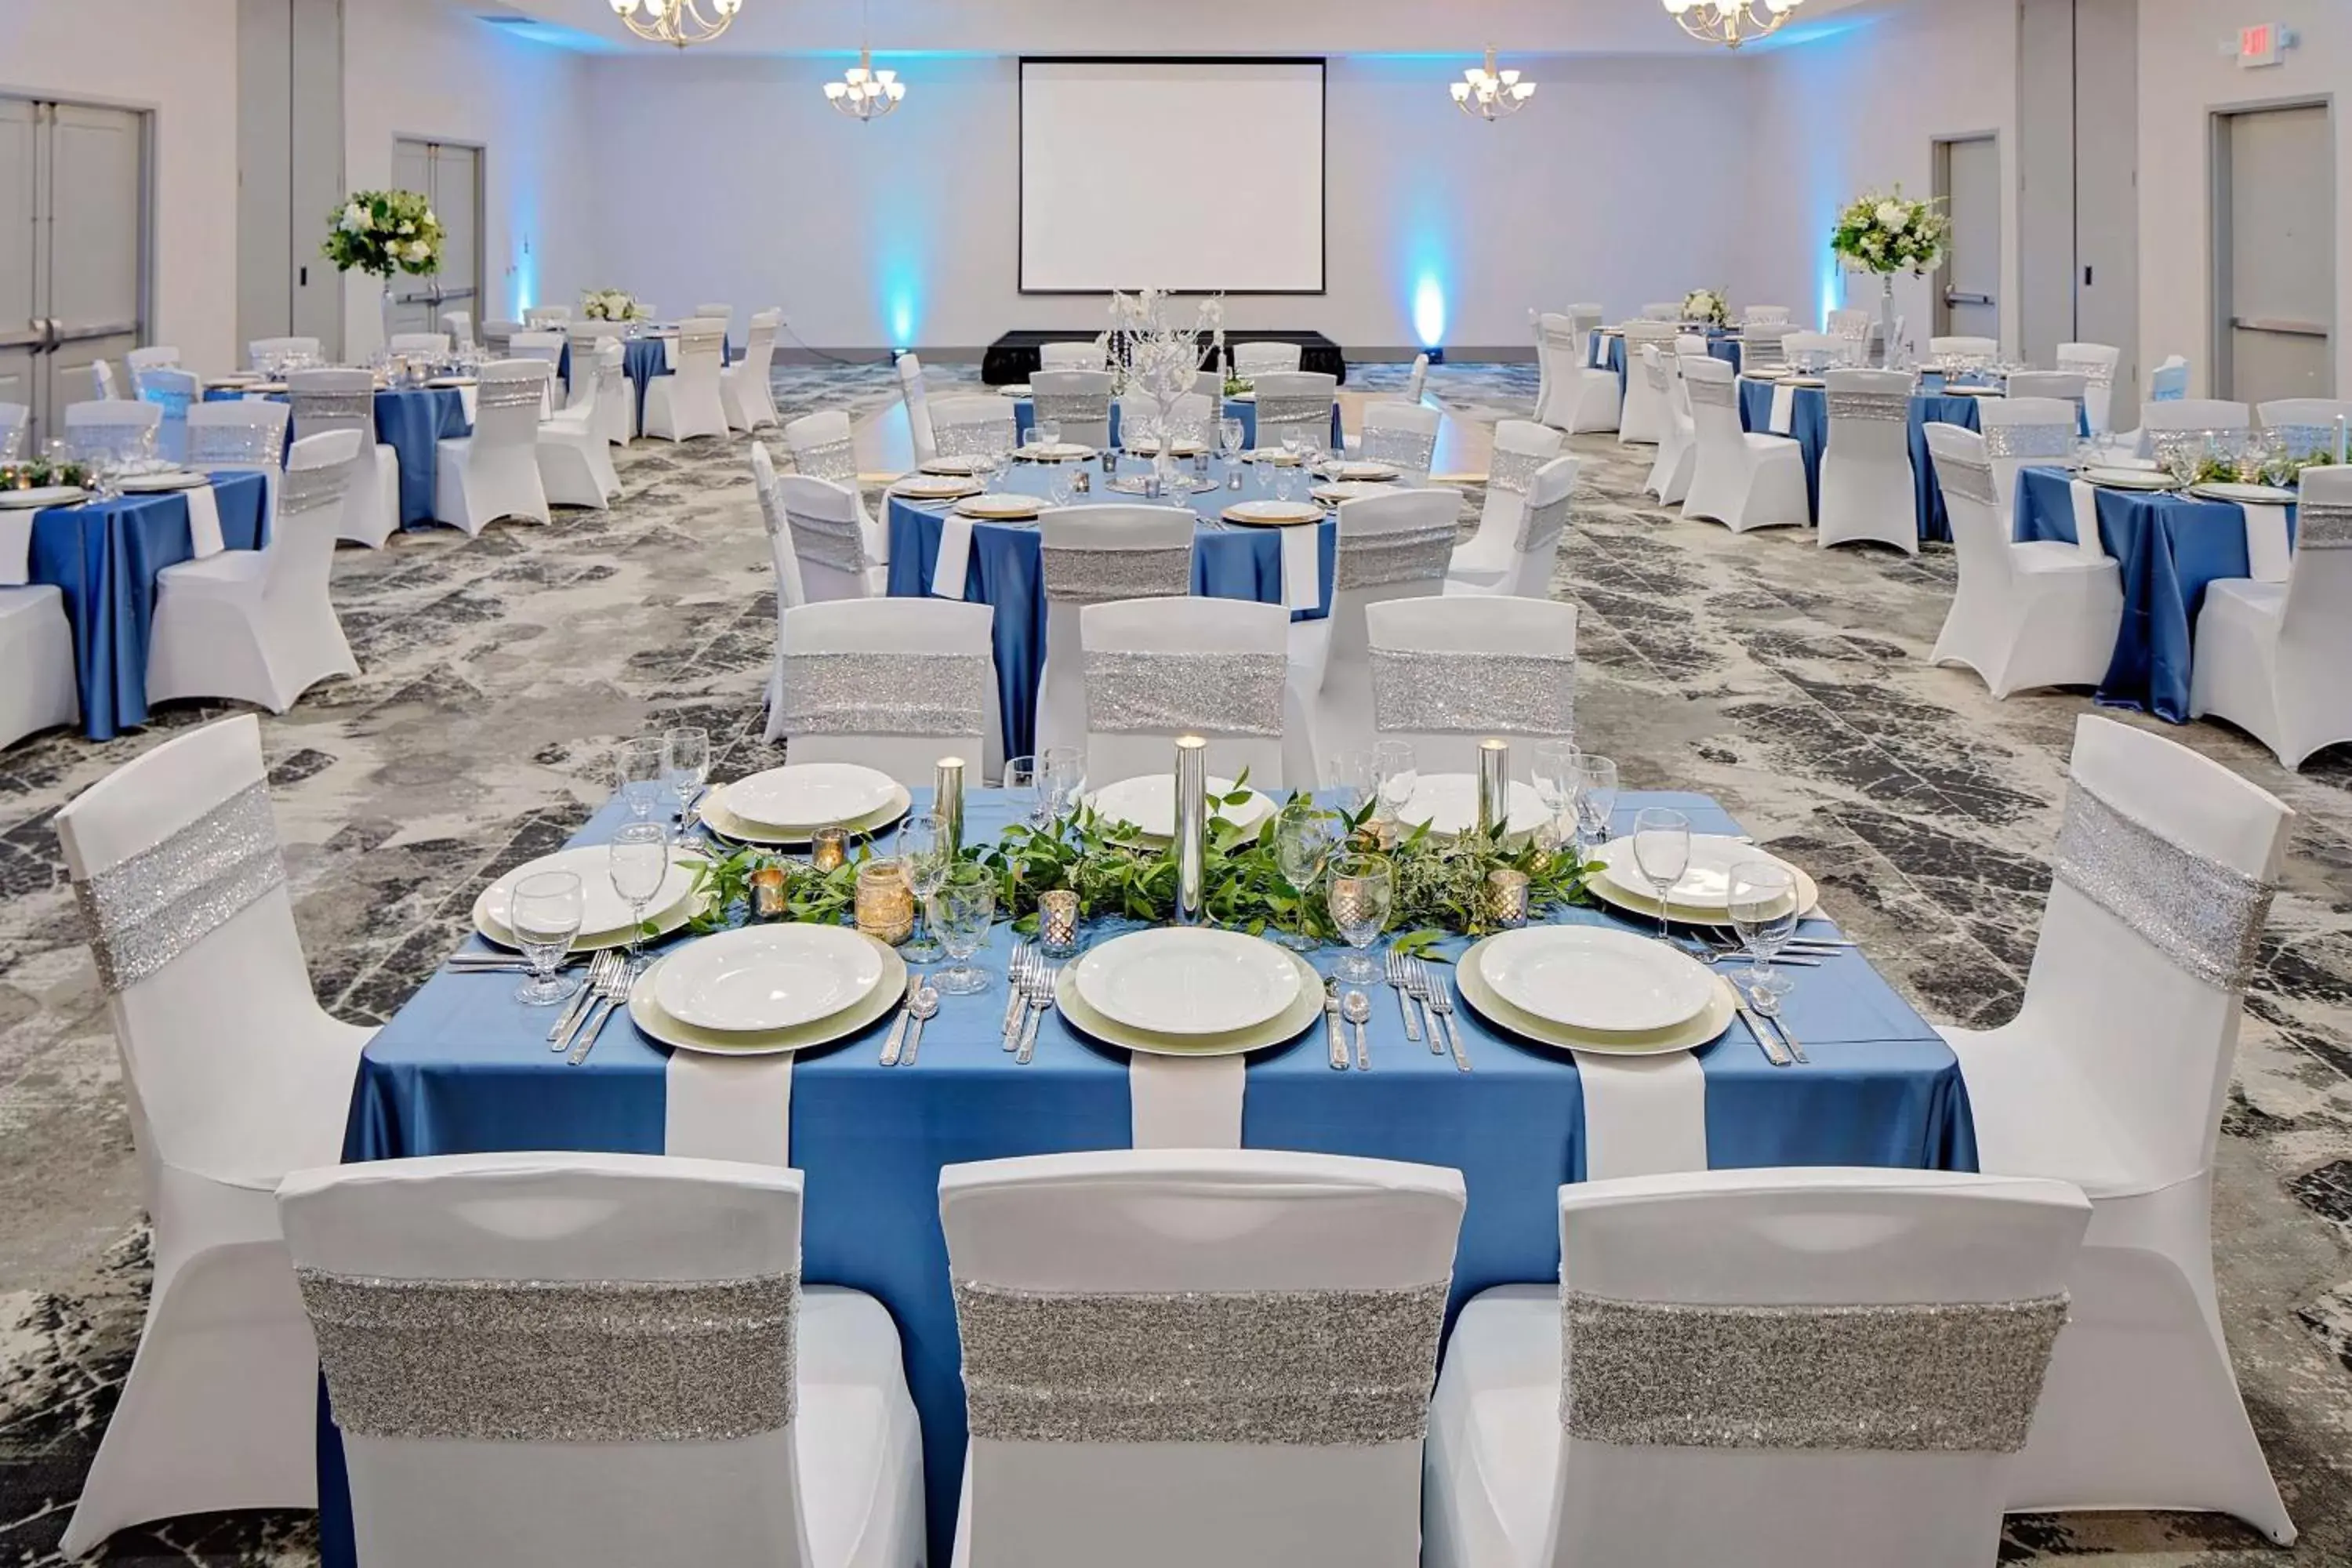 Dining area, Banquet Facilities in Hilton Garden Inn DFW Airport South